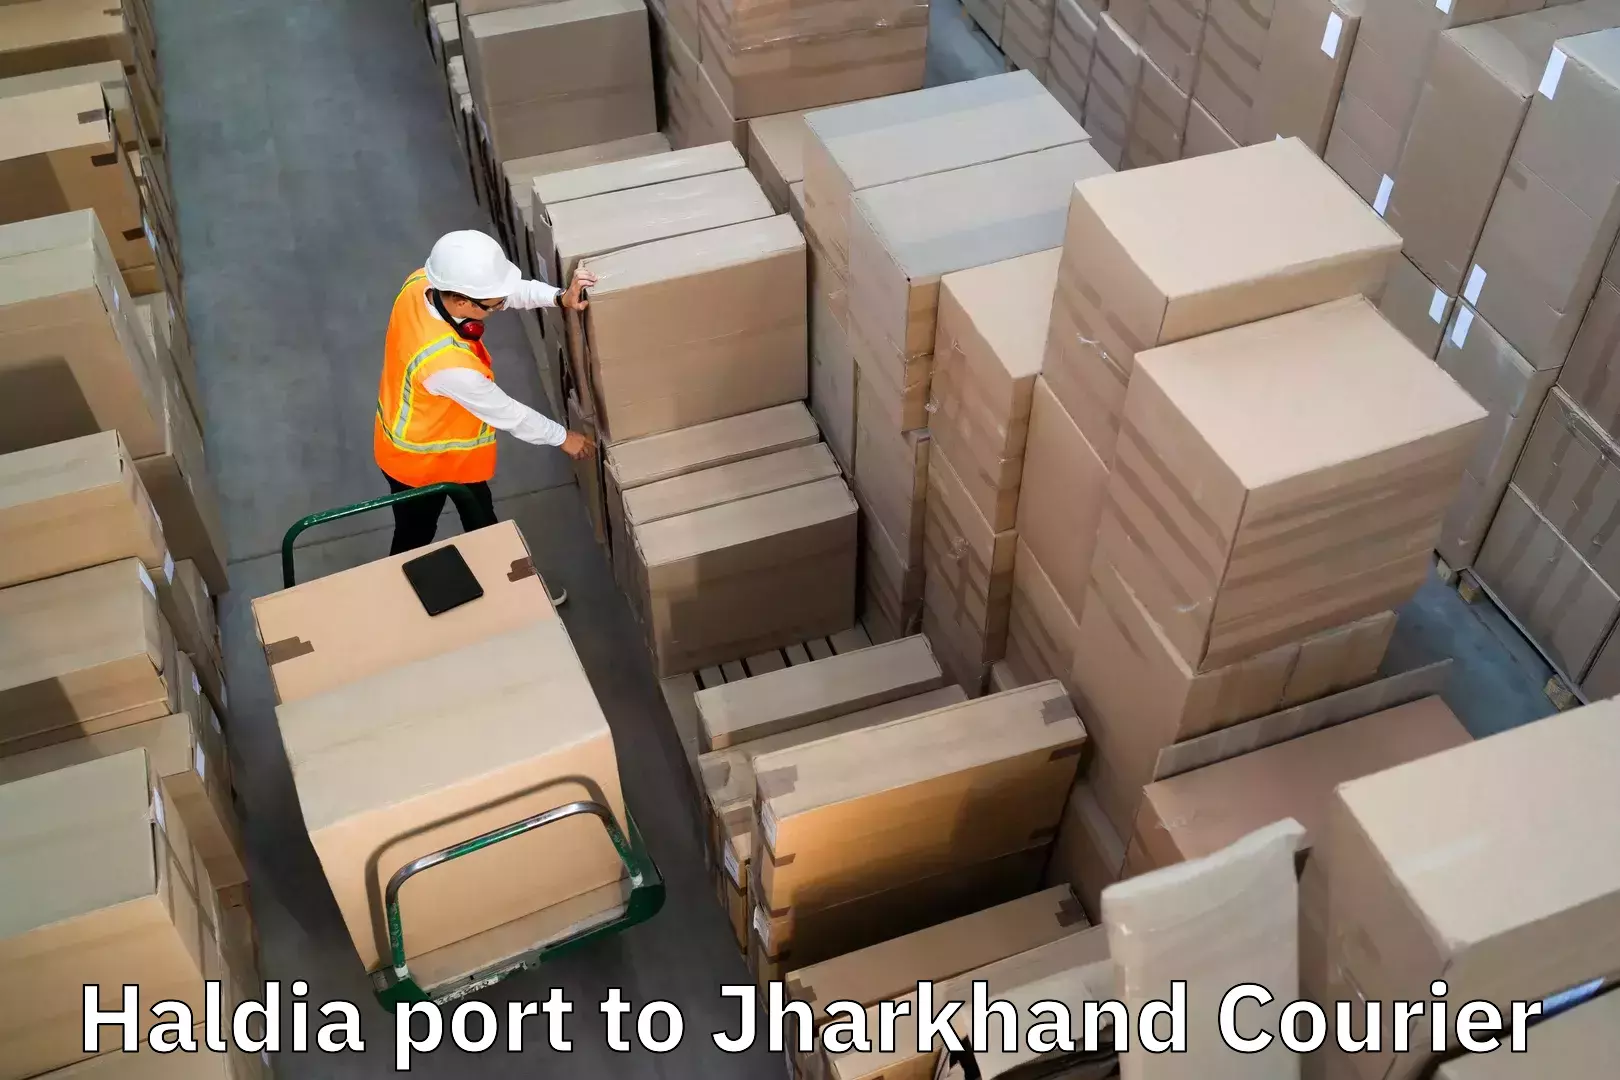 Luggage transport company Haldia port to Kedla